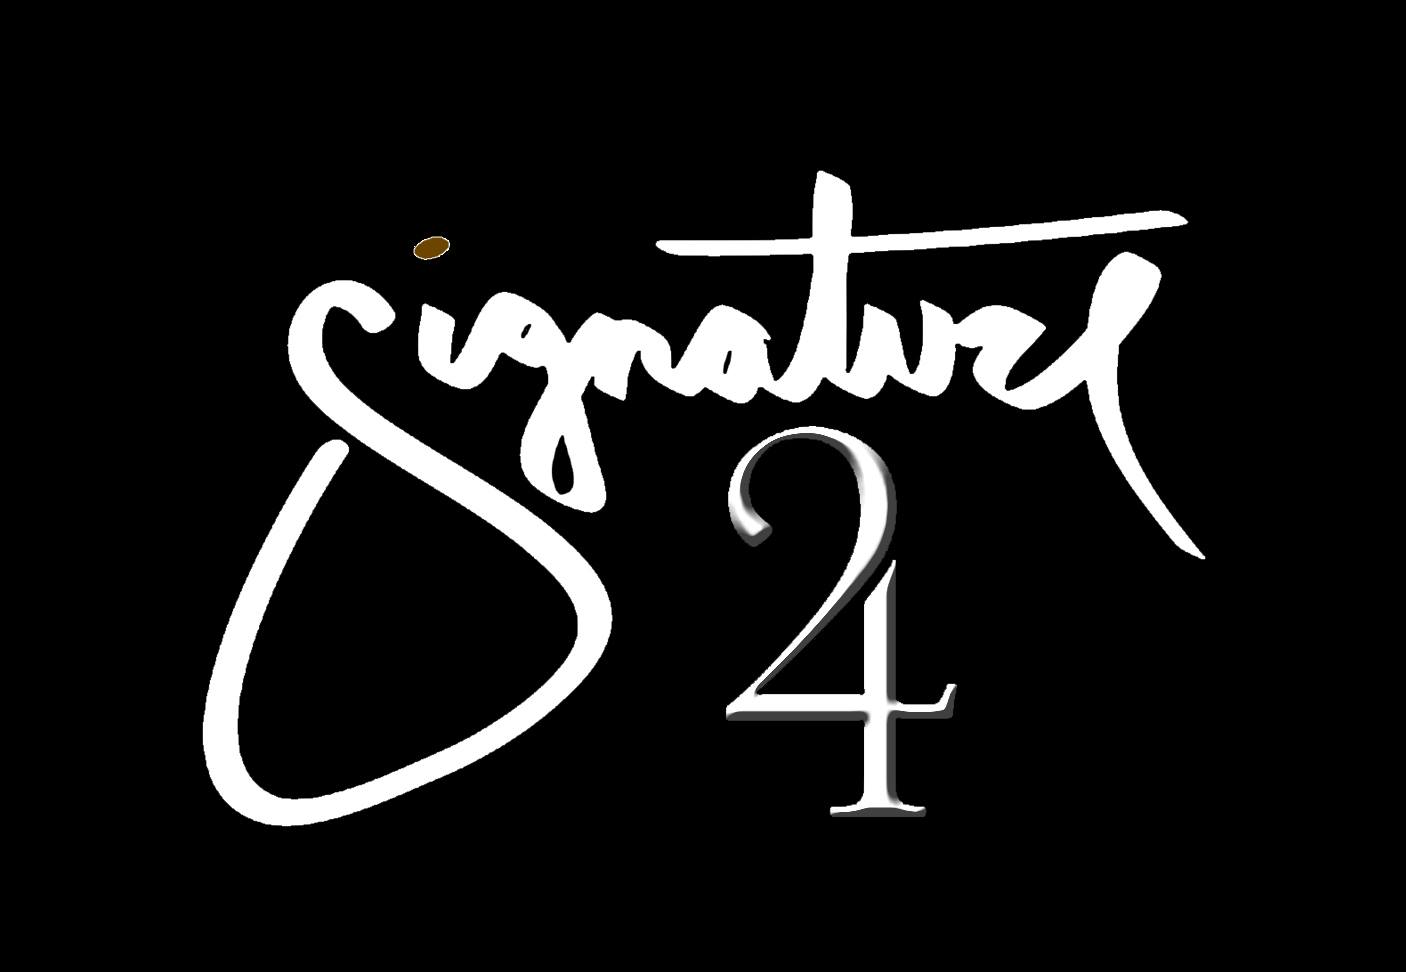 Signature 24 Productions